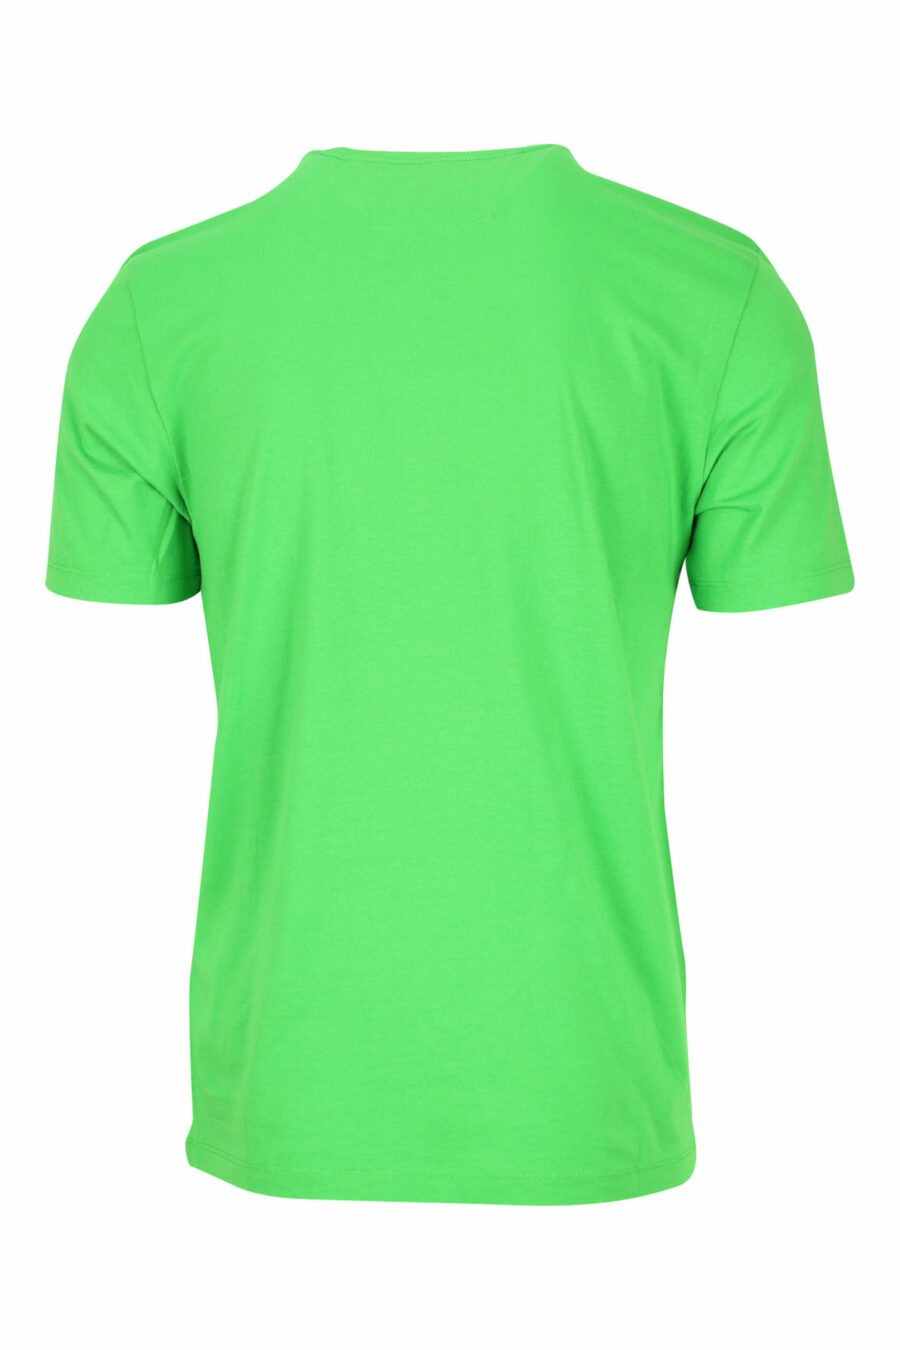 Camiseta verde con maxilogo gráfico - 7620943560626 1 scaled